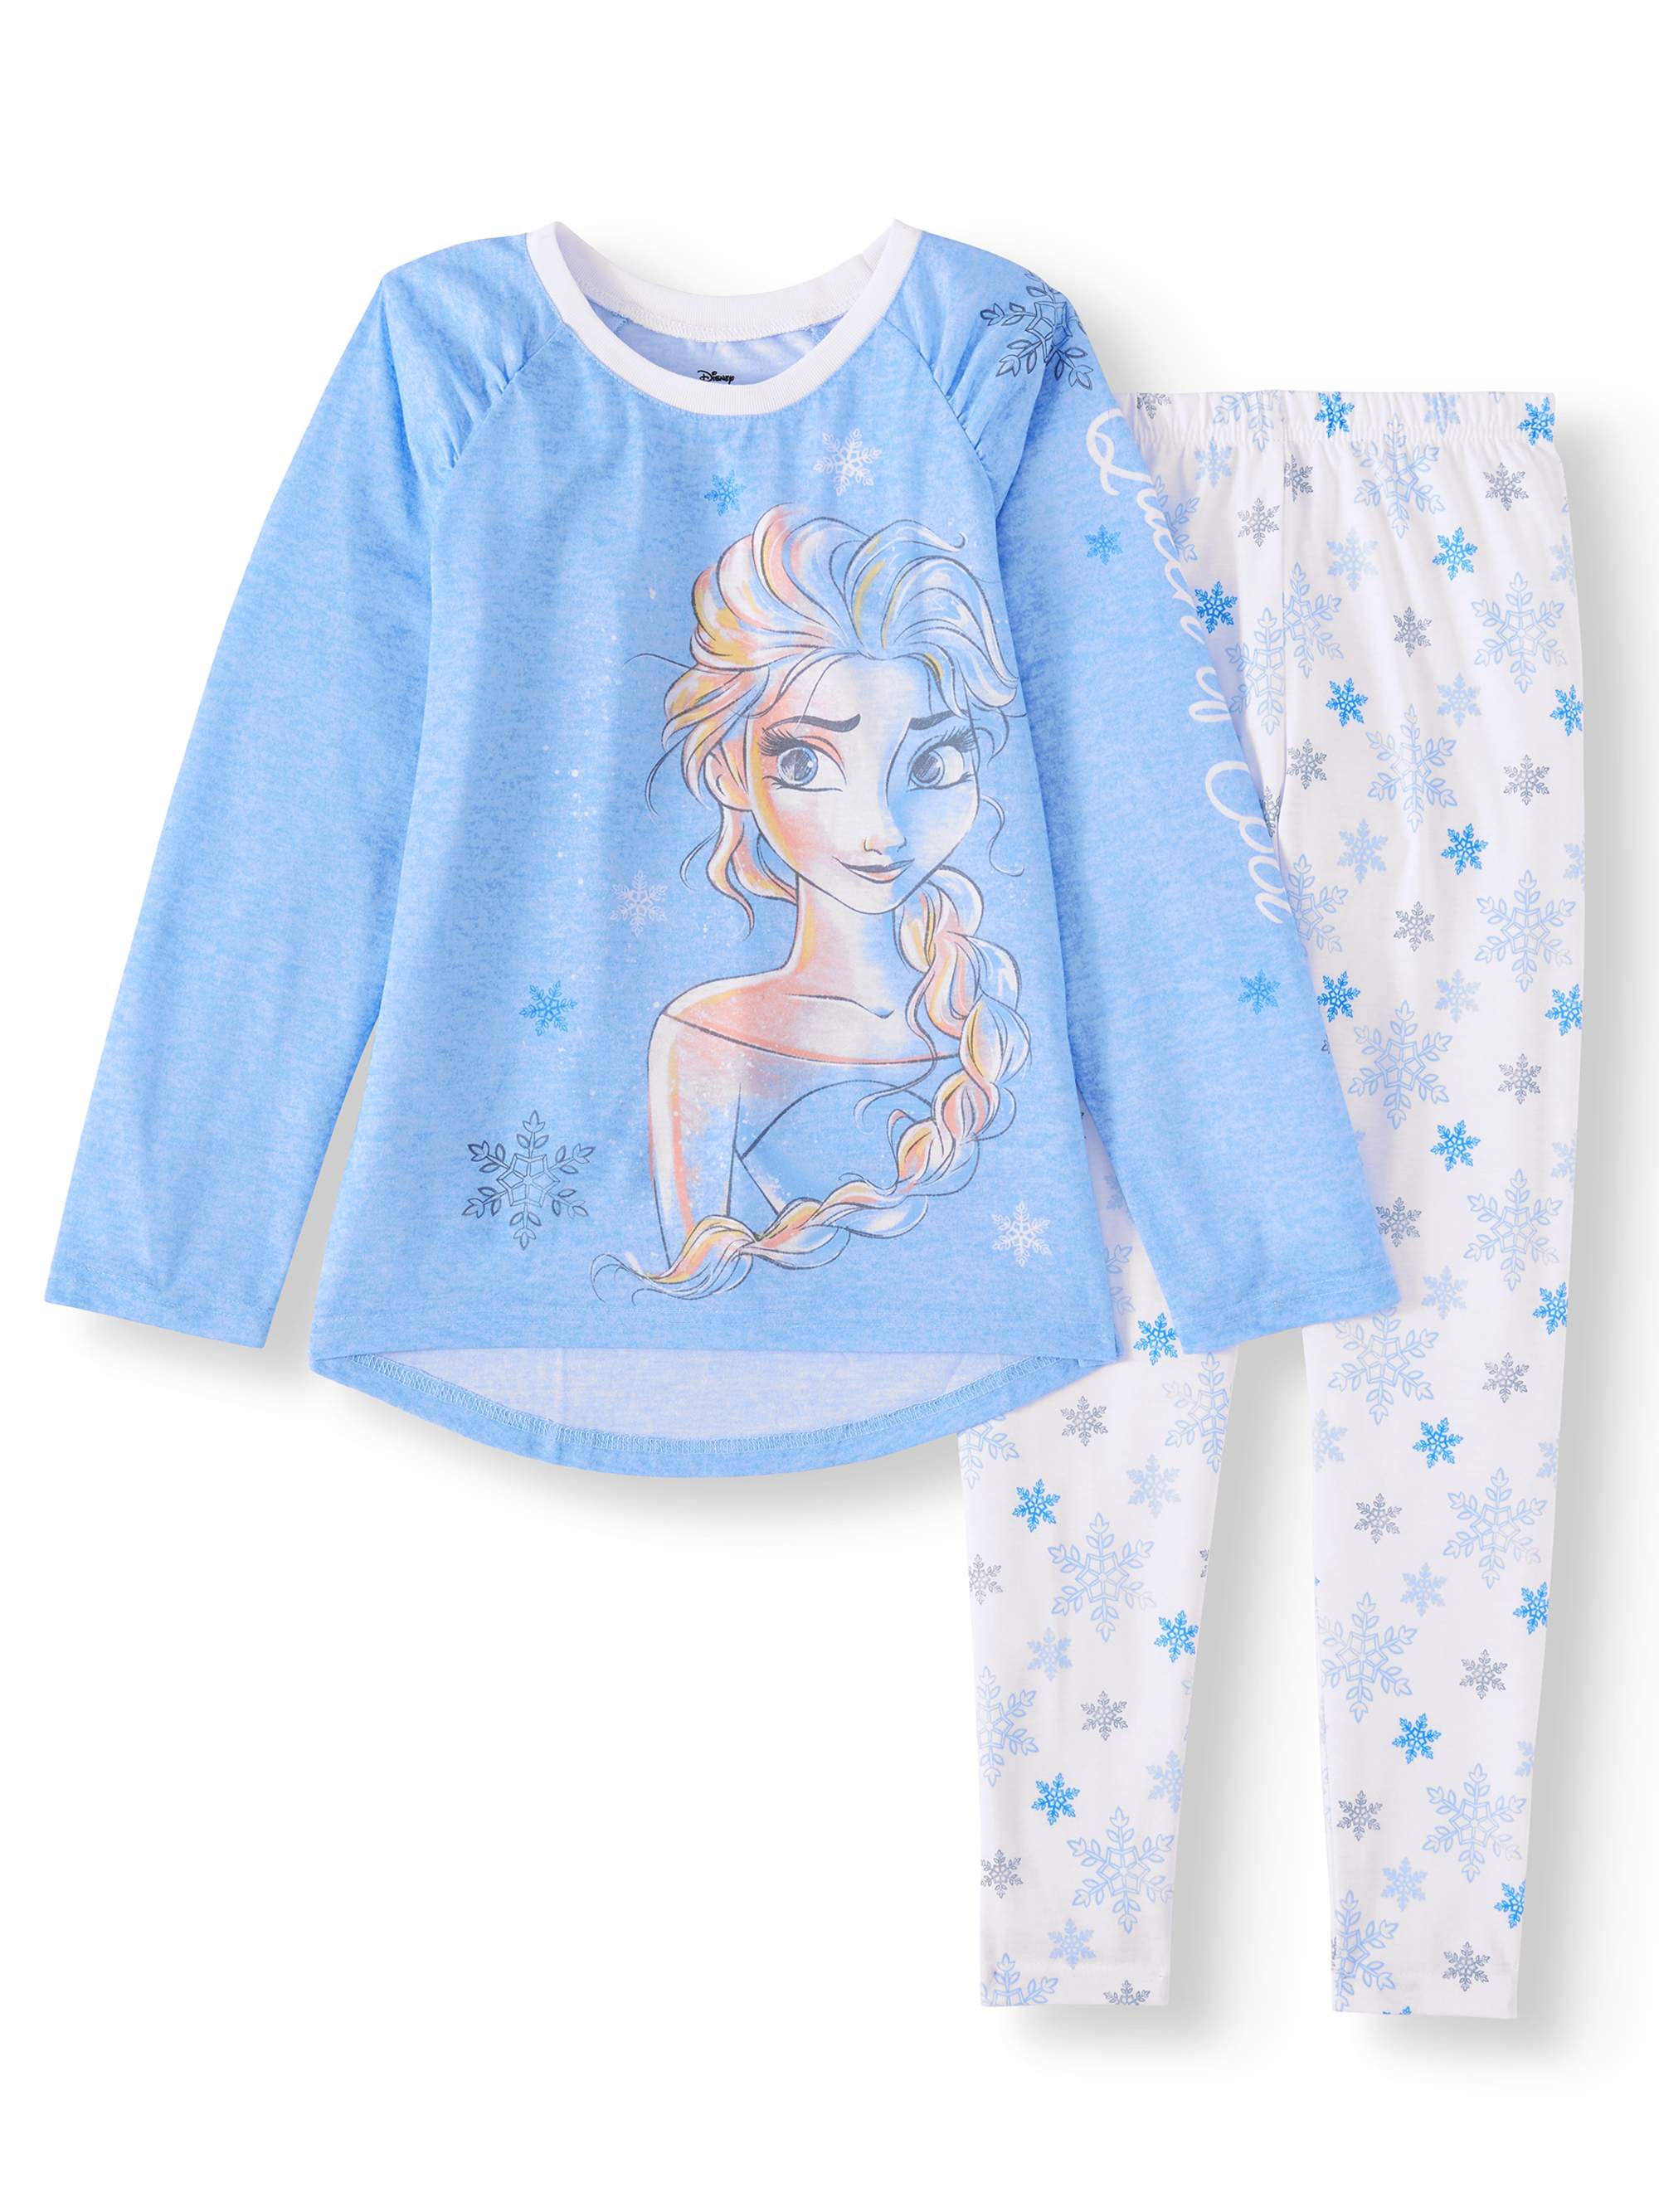 Frozen Elsa Girl's 2-Piece Pajama Set (Little Girls & Big Girls) - image 1 of 2